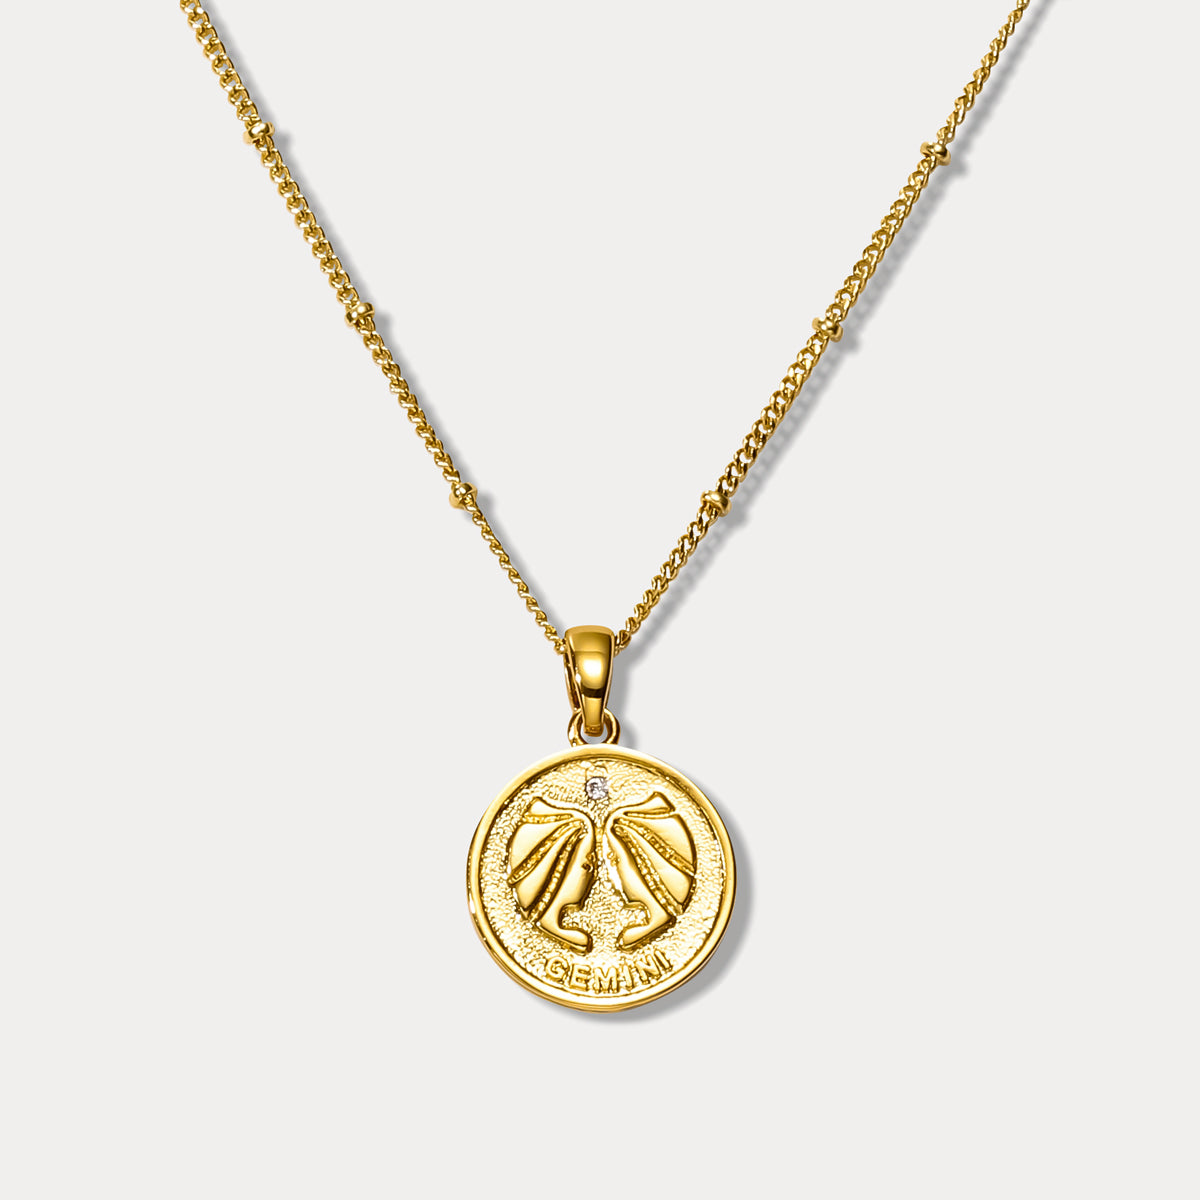 Gemini Constellation Coin Pendant Necklace